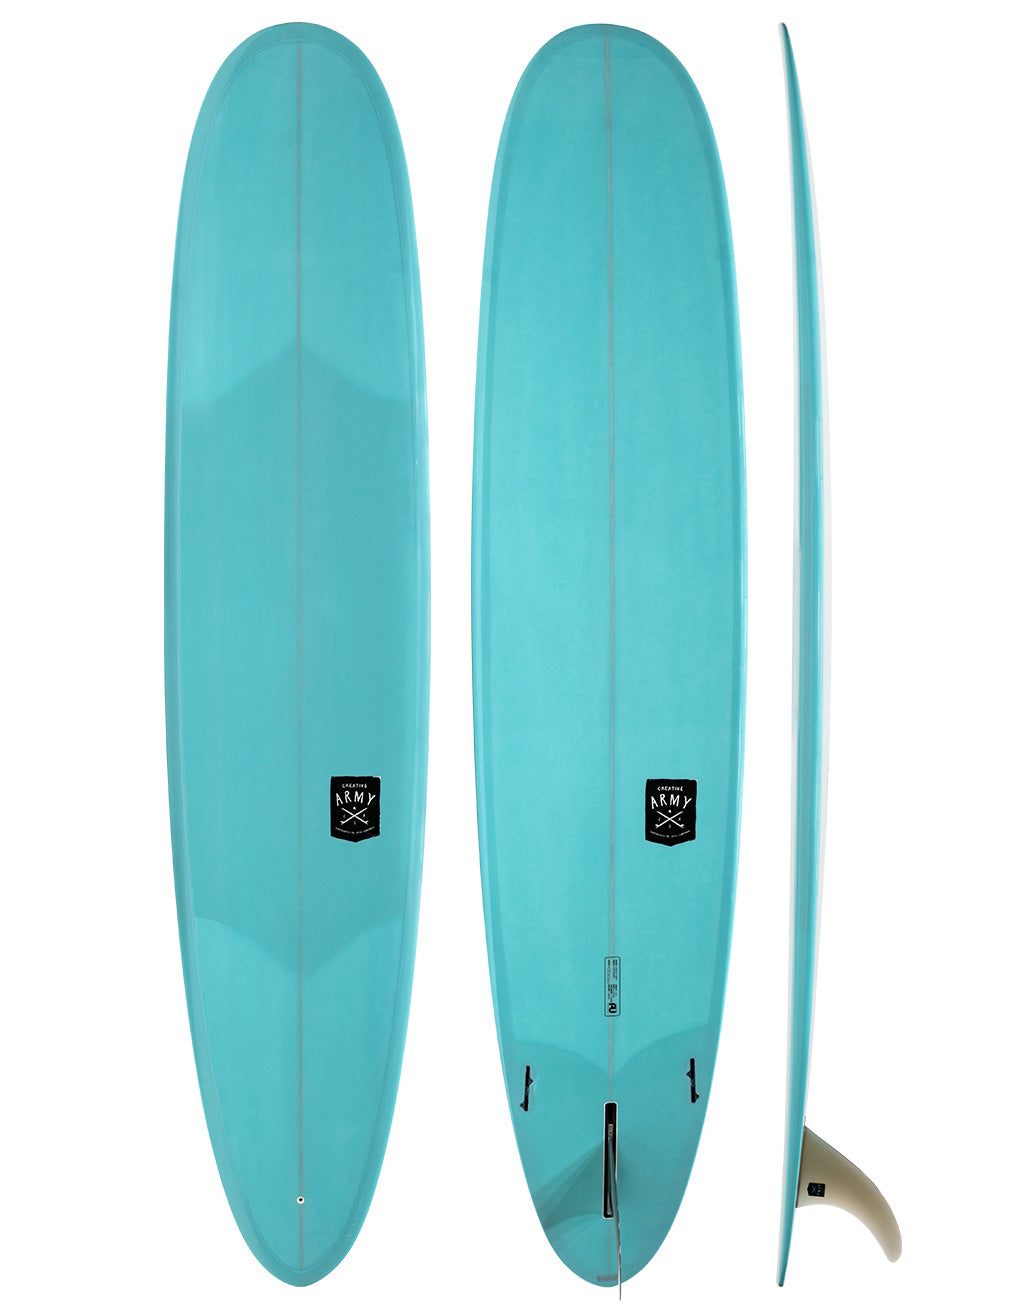 Creative Army Surfboards - Five Sugars blue longboard